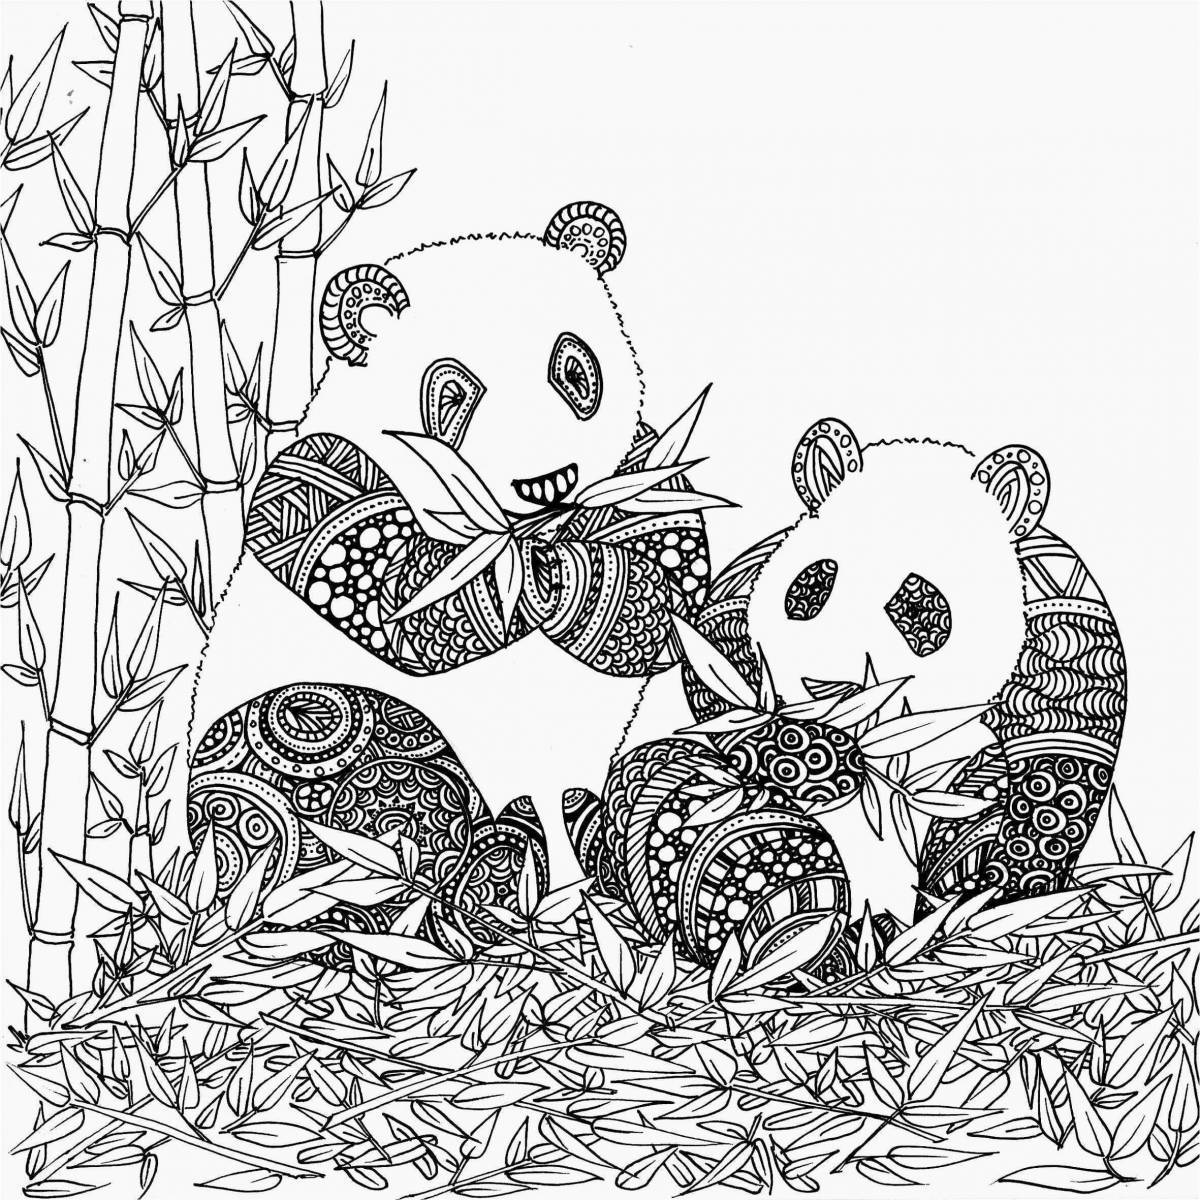 Adorable panda coloring book